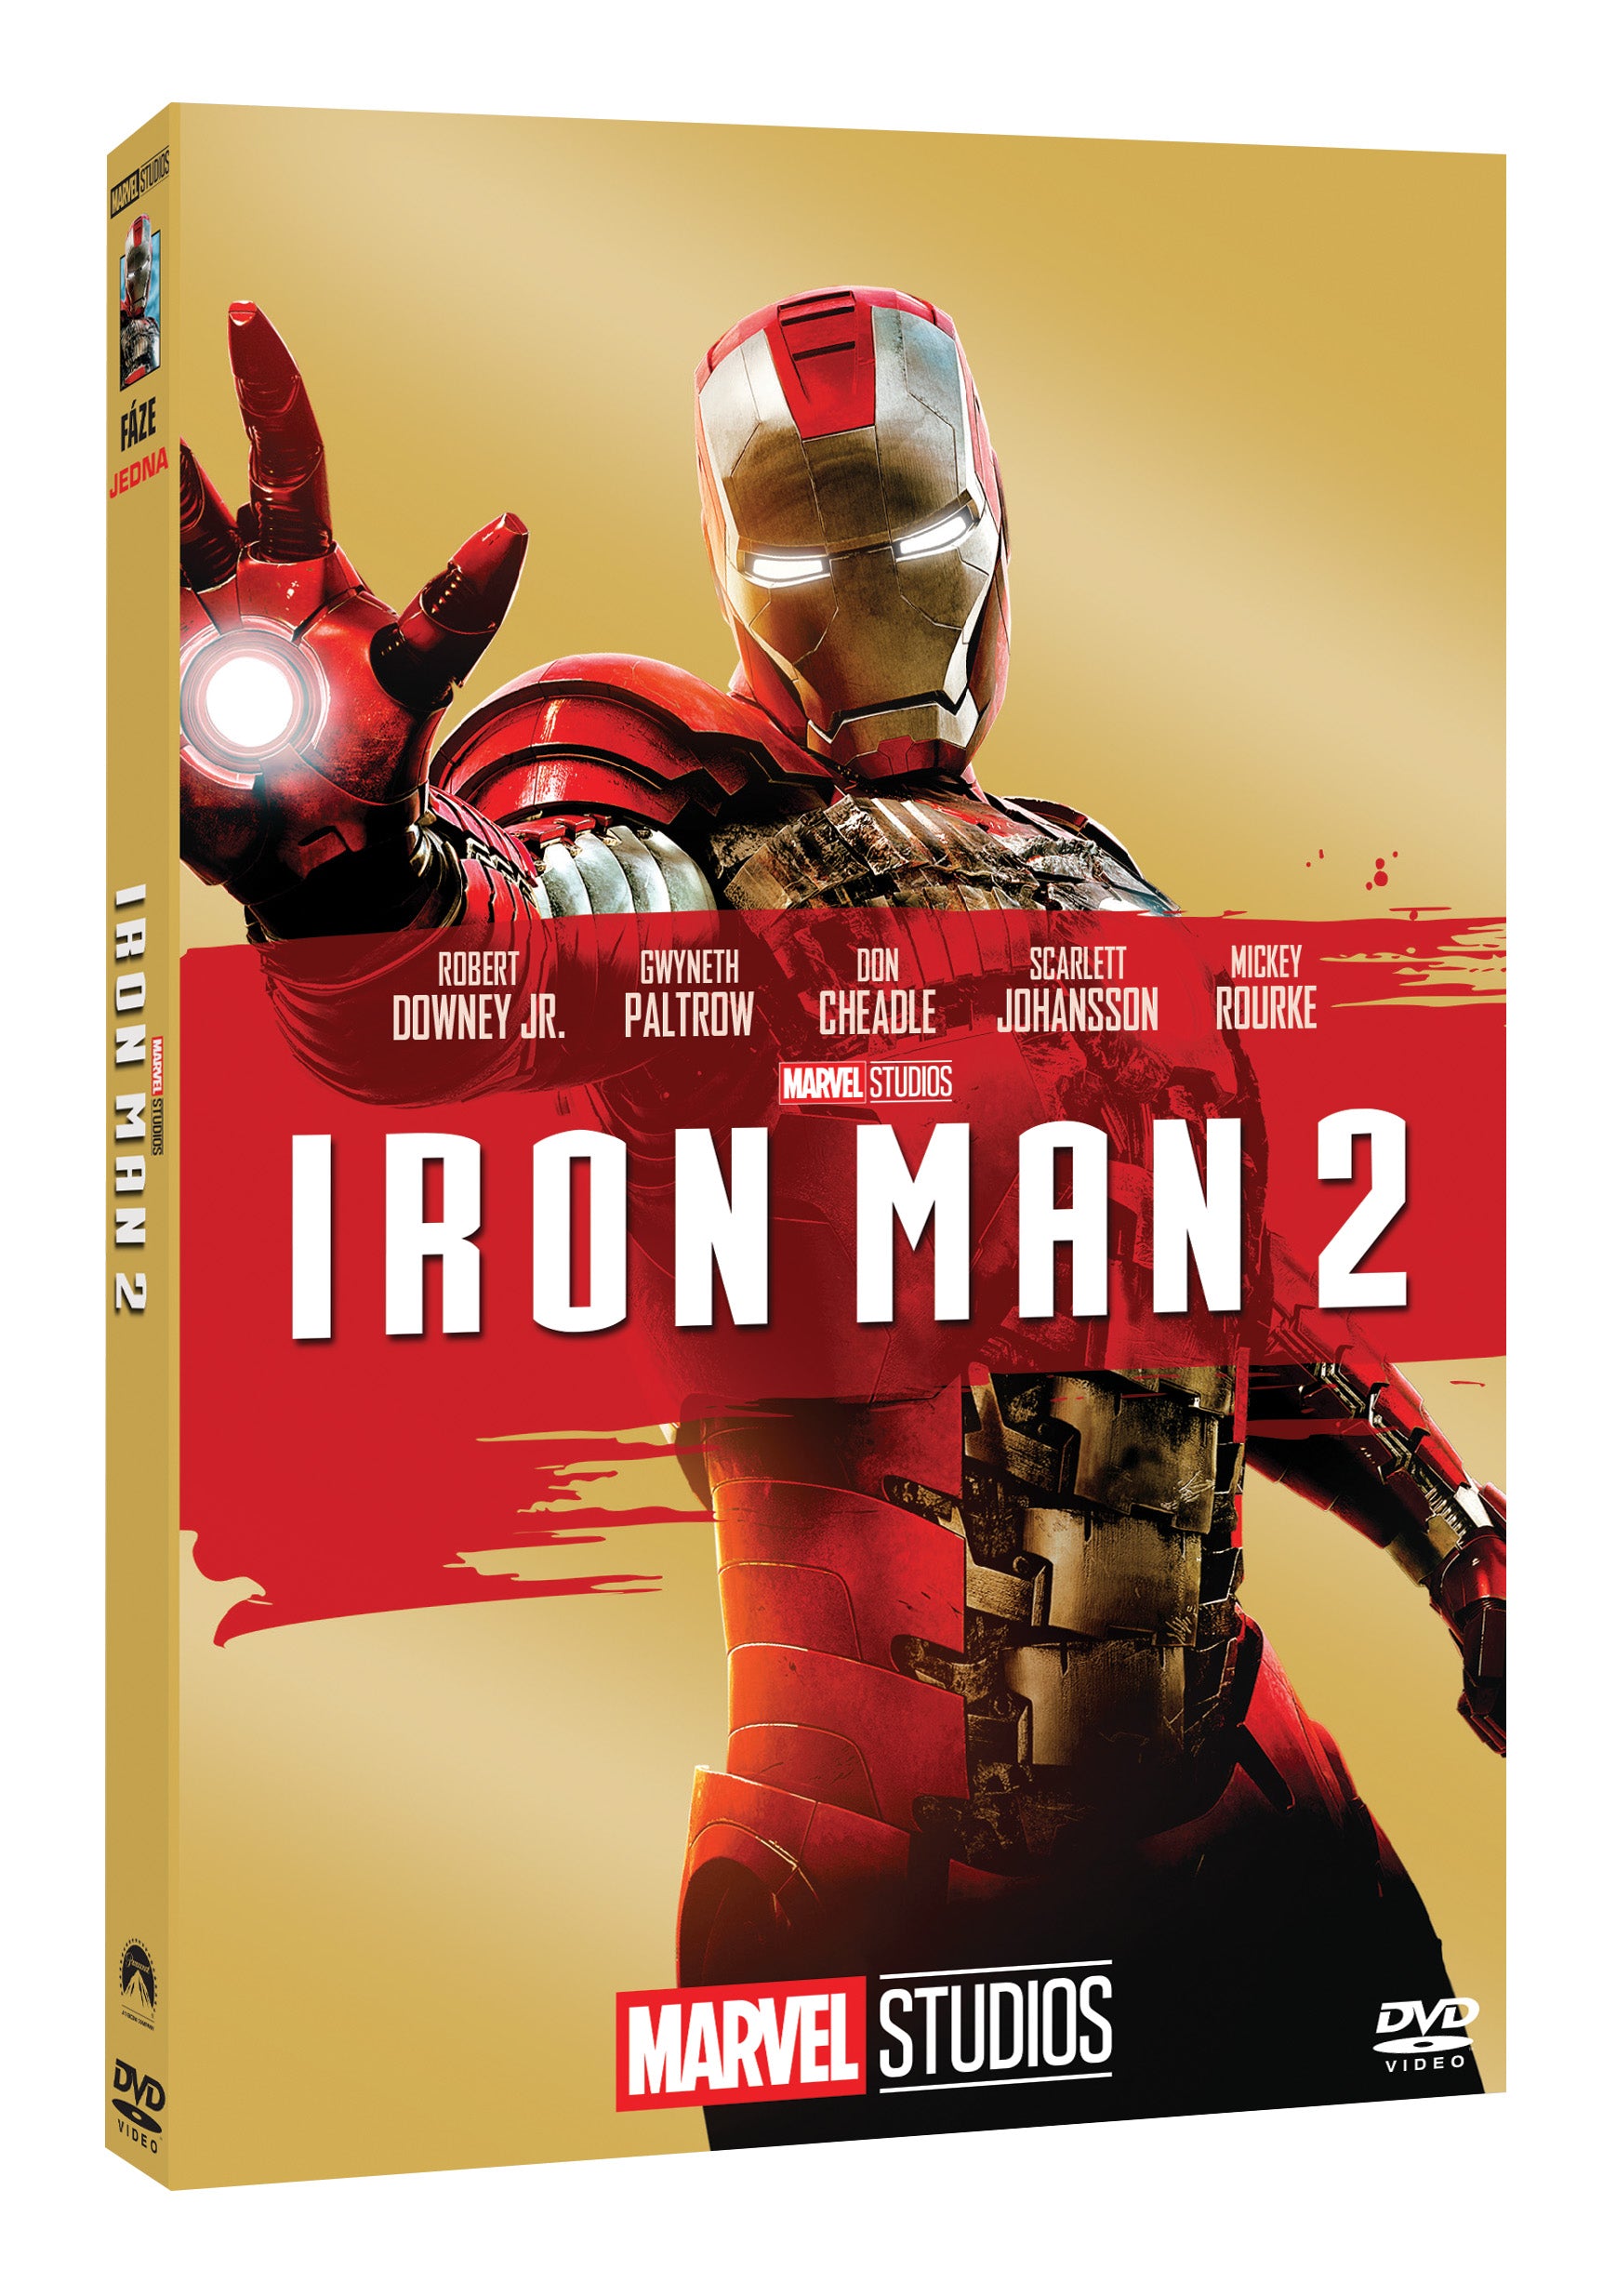 Iron Man 2 DVD - Edice Marvel 10 let / Iron Man 2